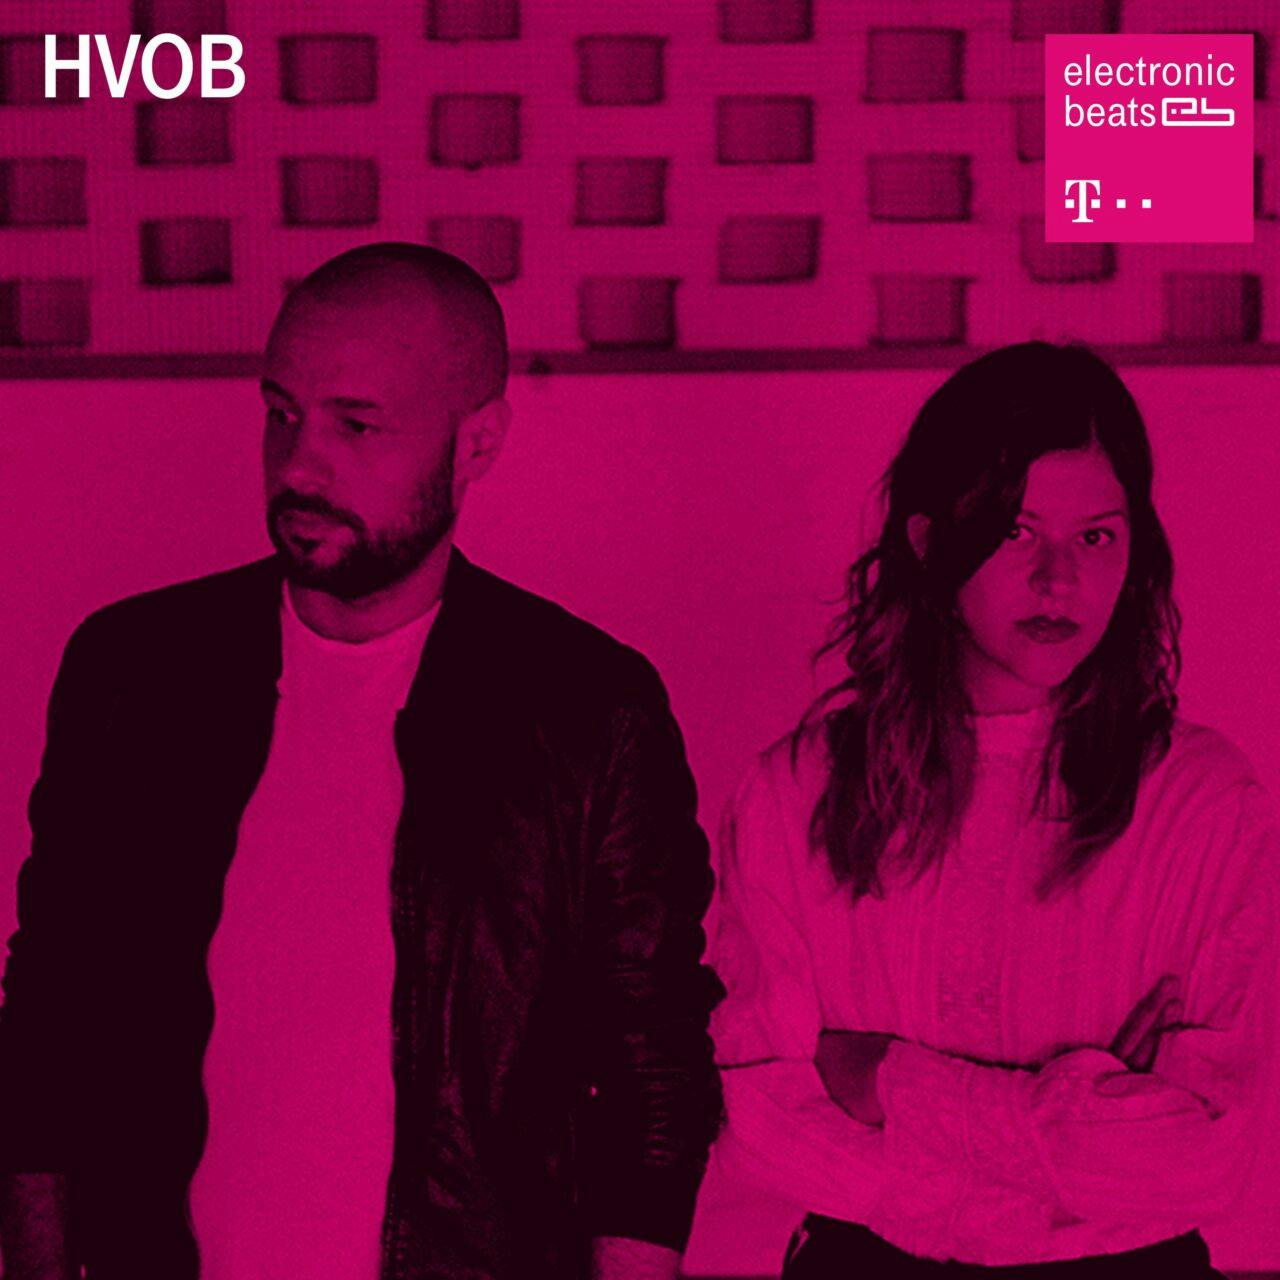 Das Wiener Duo HVOB im Telekom Electronic Beats Podcast